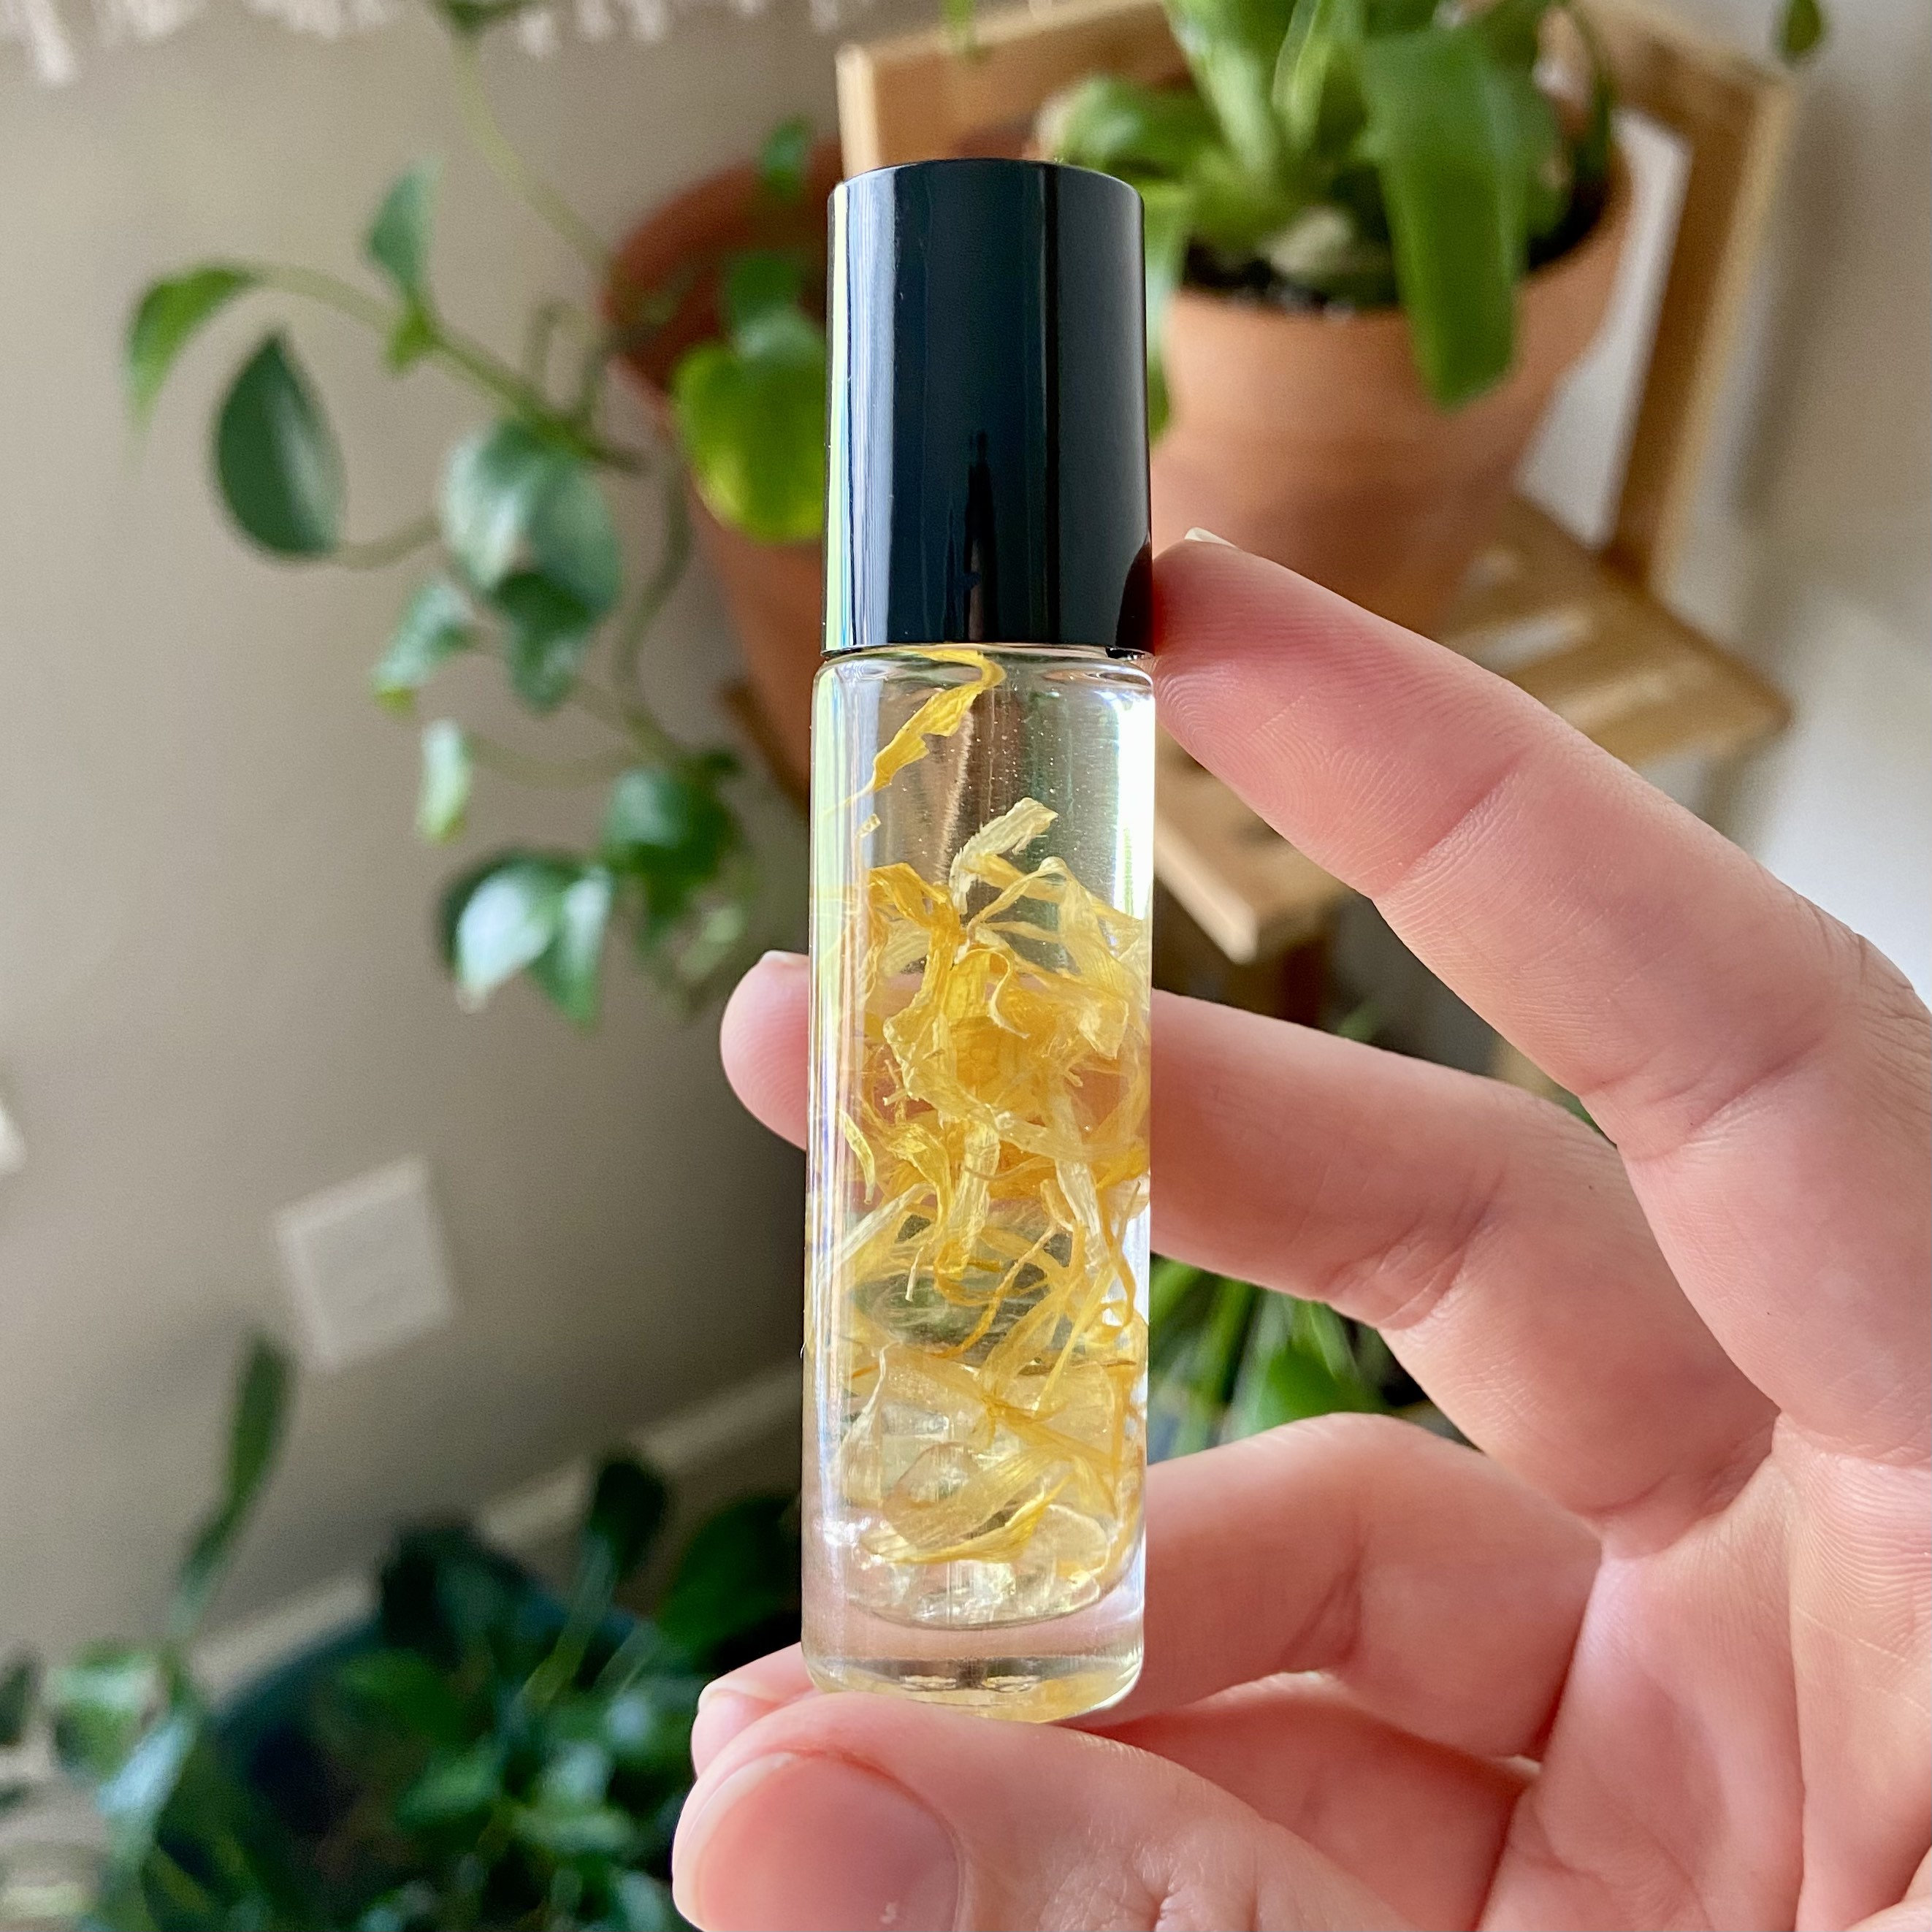 Serenity - Gift Set of 6 All Natural Fragrance Oils - Ultra Green, Serene  Oasis, Green Citrus Wood, Sea Salt, Appalachian Wind and Fresh Citrus Aloe